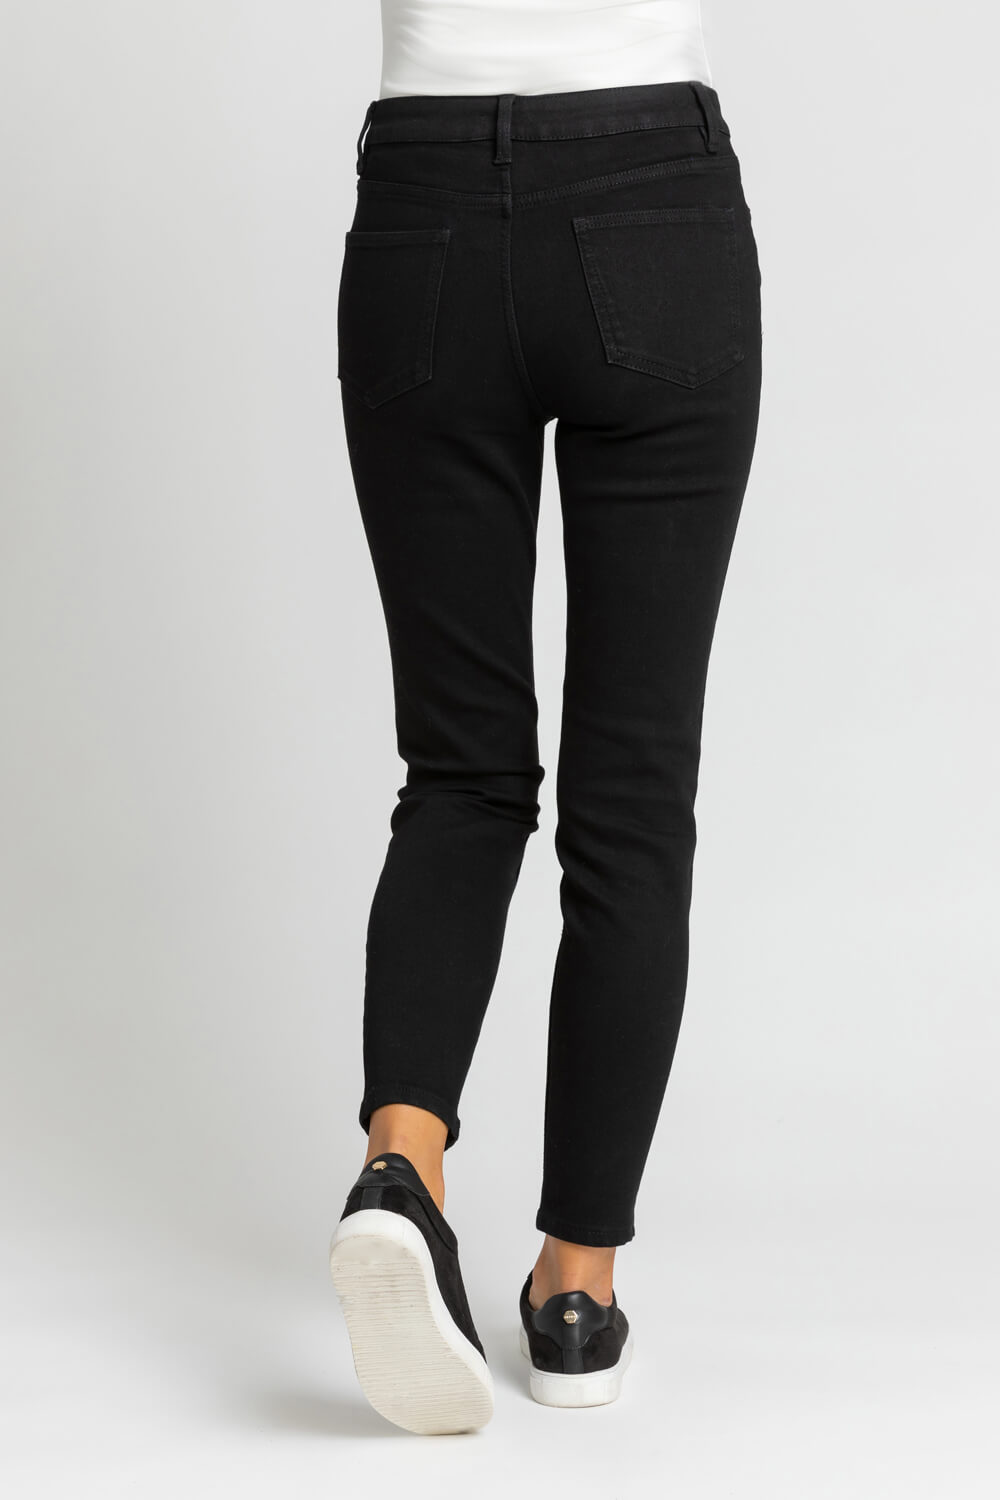 Black 29" Stretch Skinny Jeans, Image 2 of 4